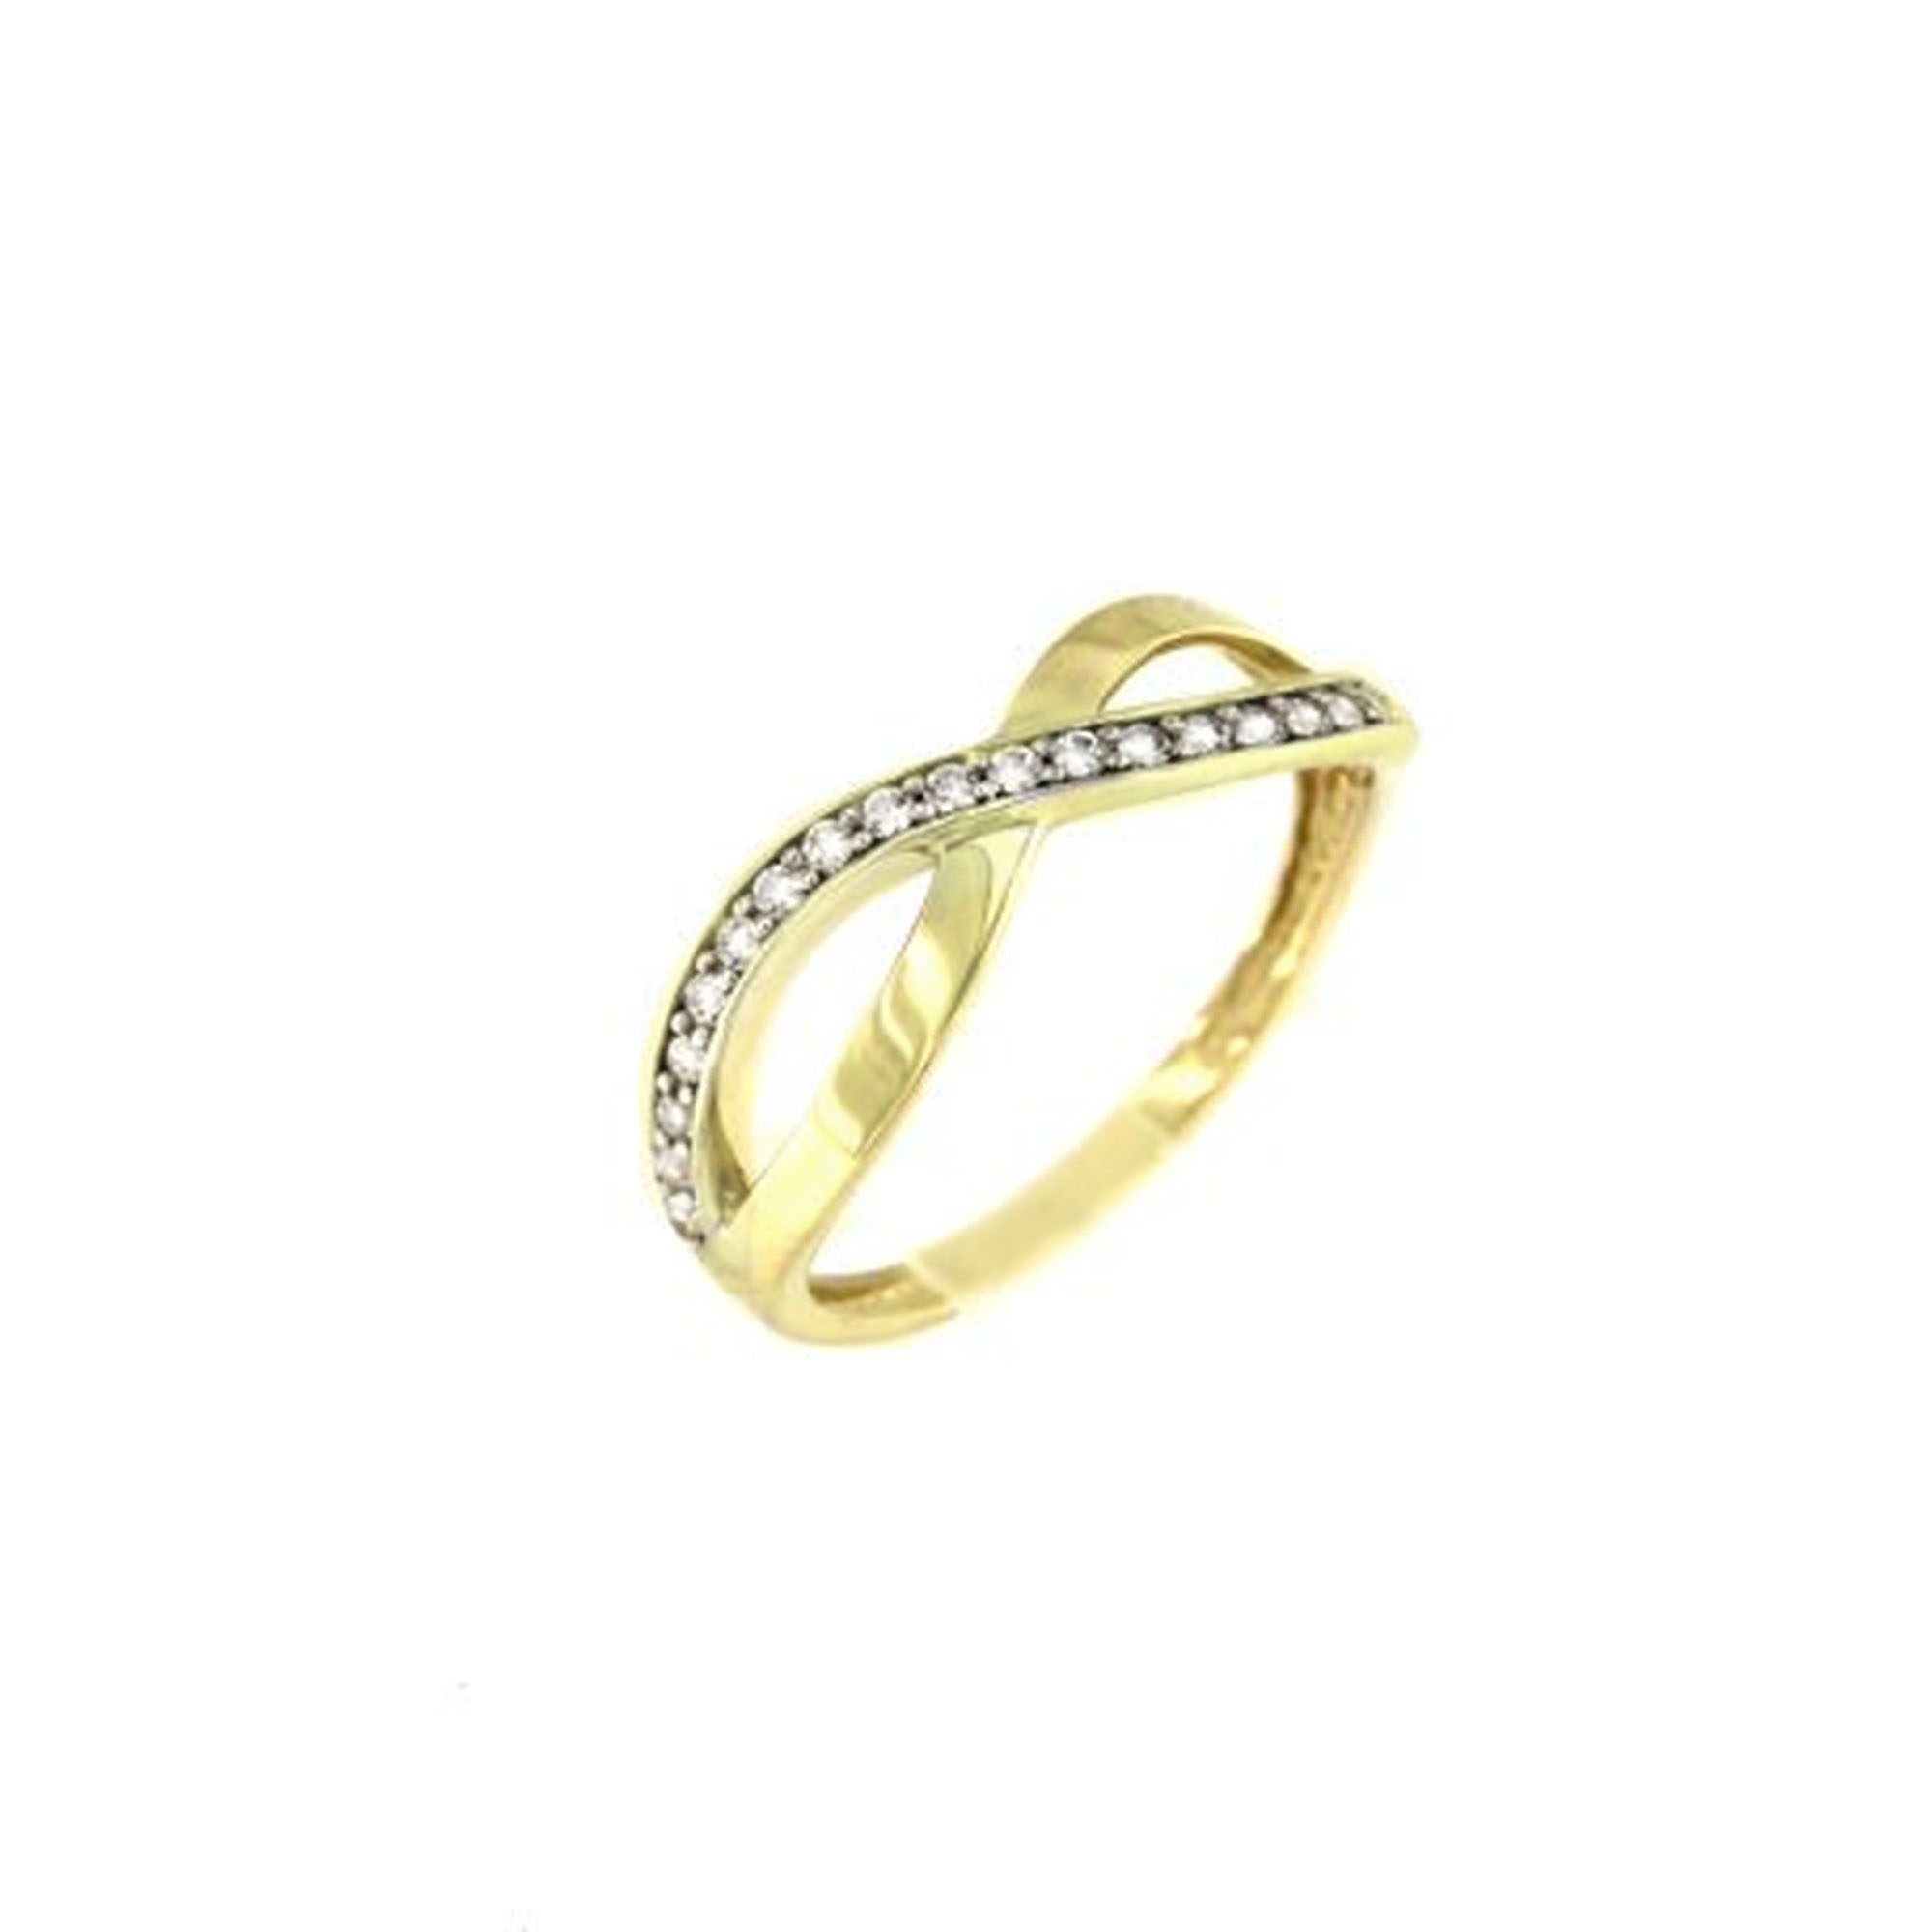 MOISS Moiss prsten ze žlutého zlata ANDELA RA000272 Velikost 60 mm RA000272 + doprava ZDARMA